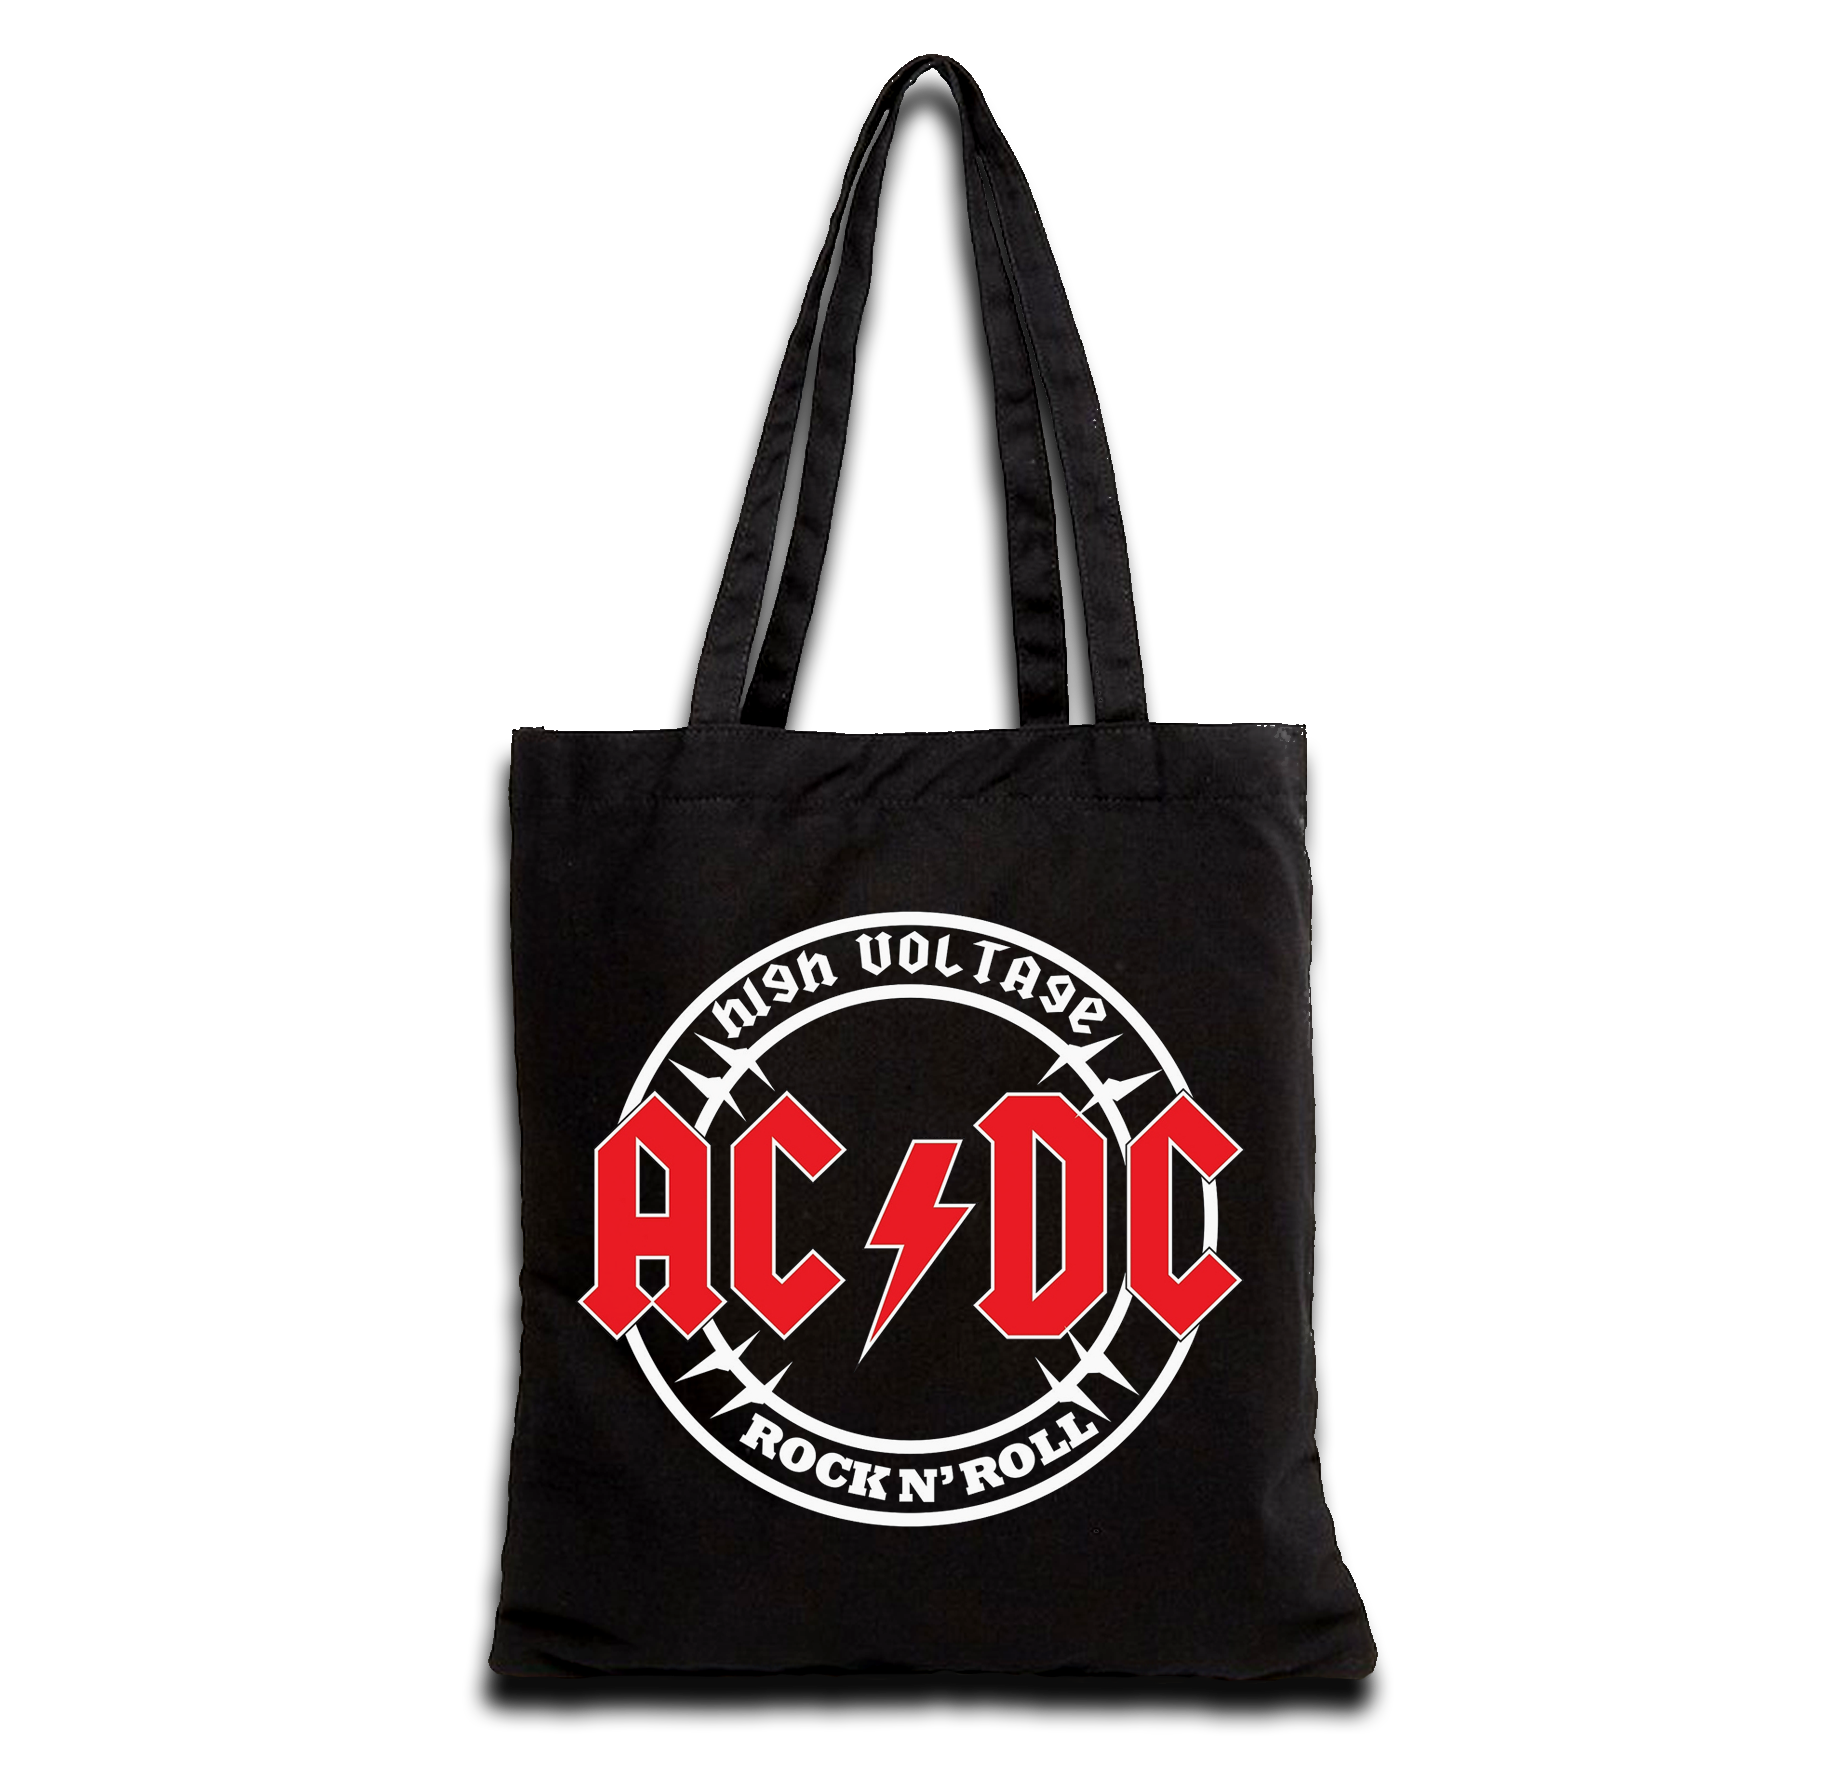 Tote Bag AC DC - borsa in tessuto